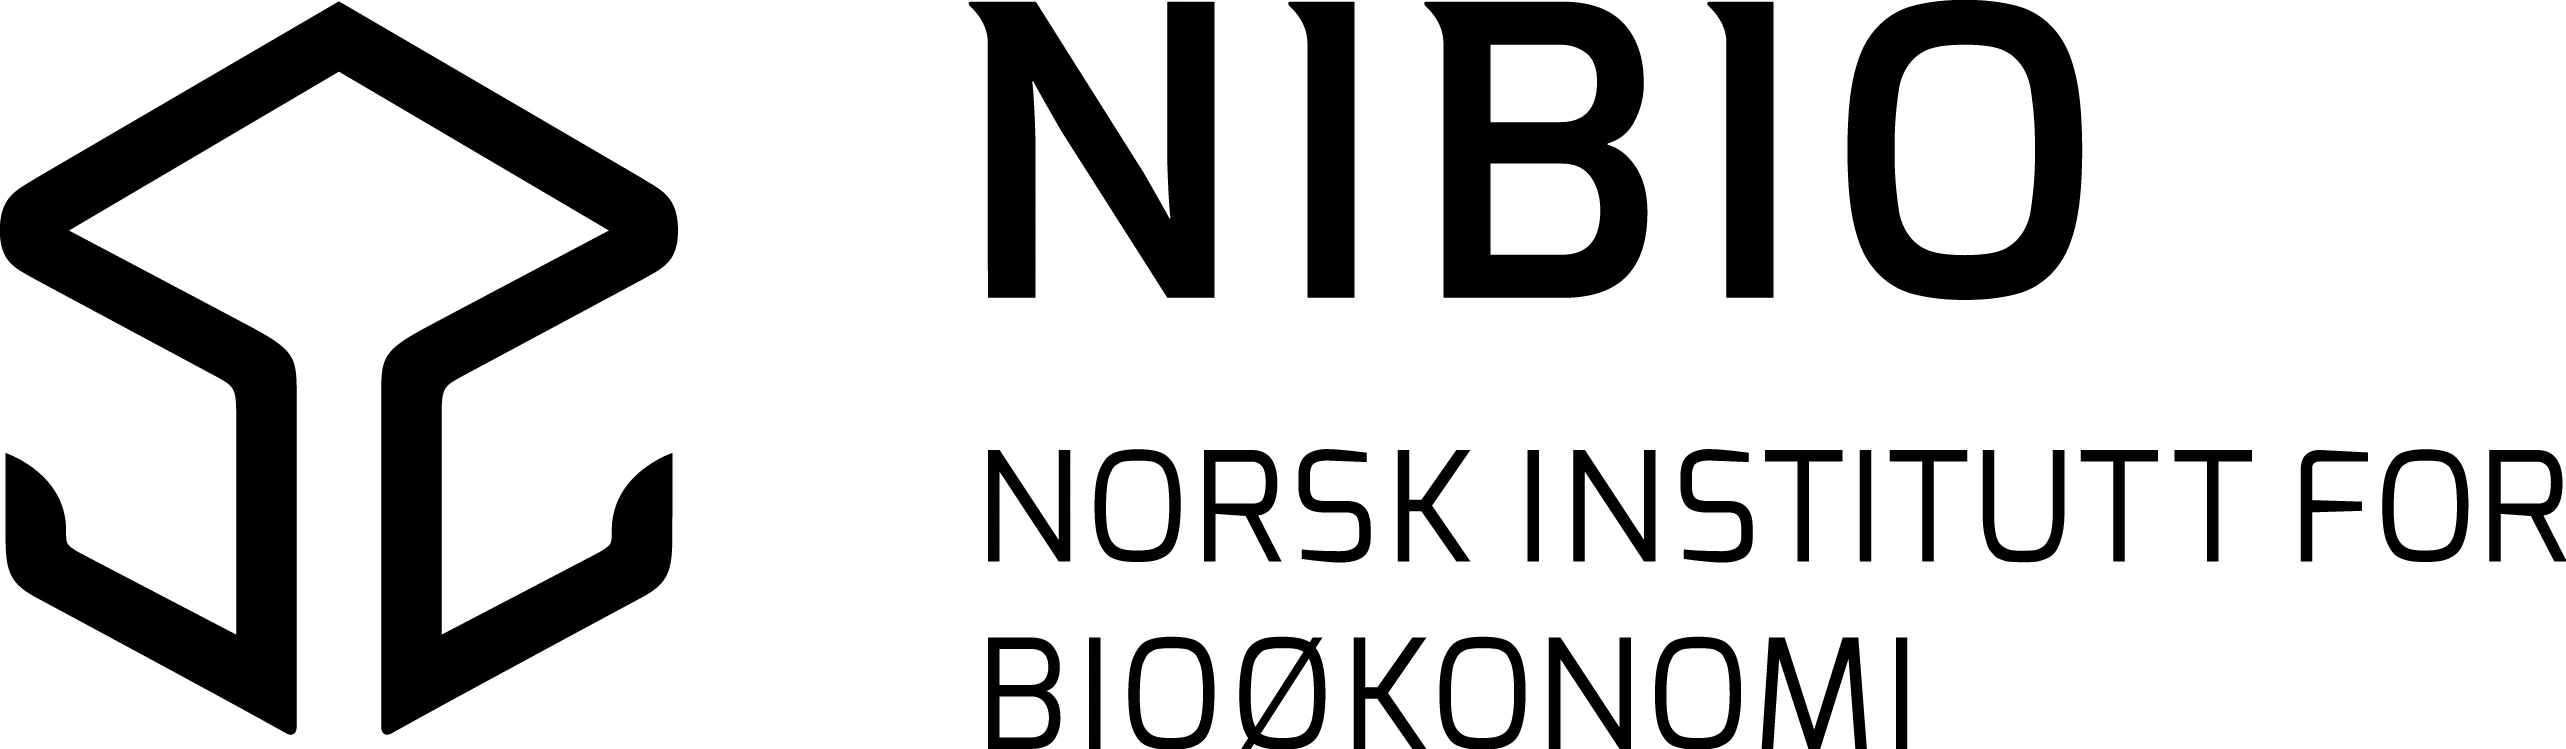 NIBIO Norsk institutt for bioøkonomi.